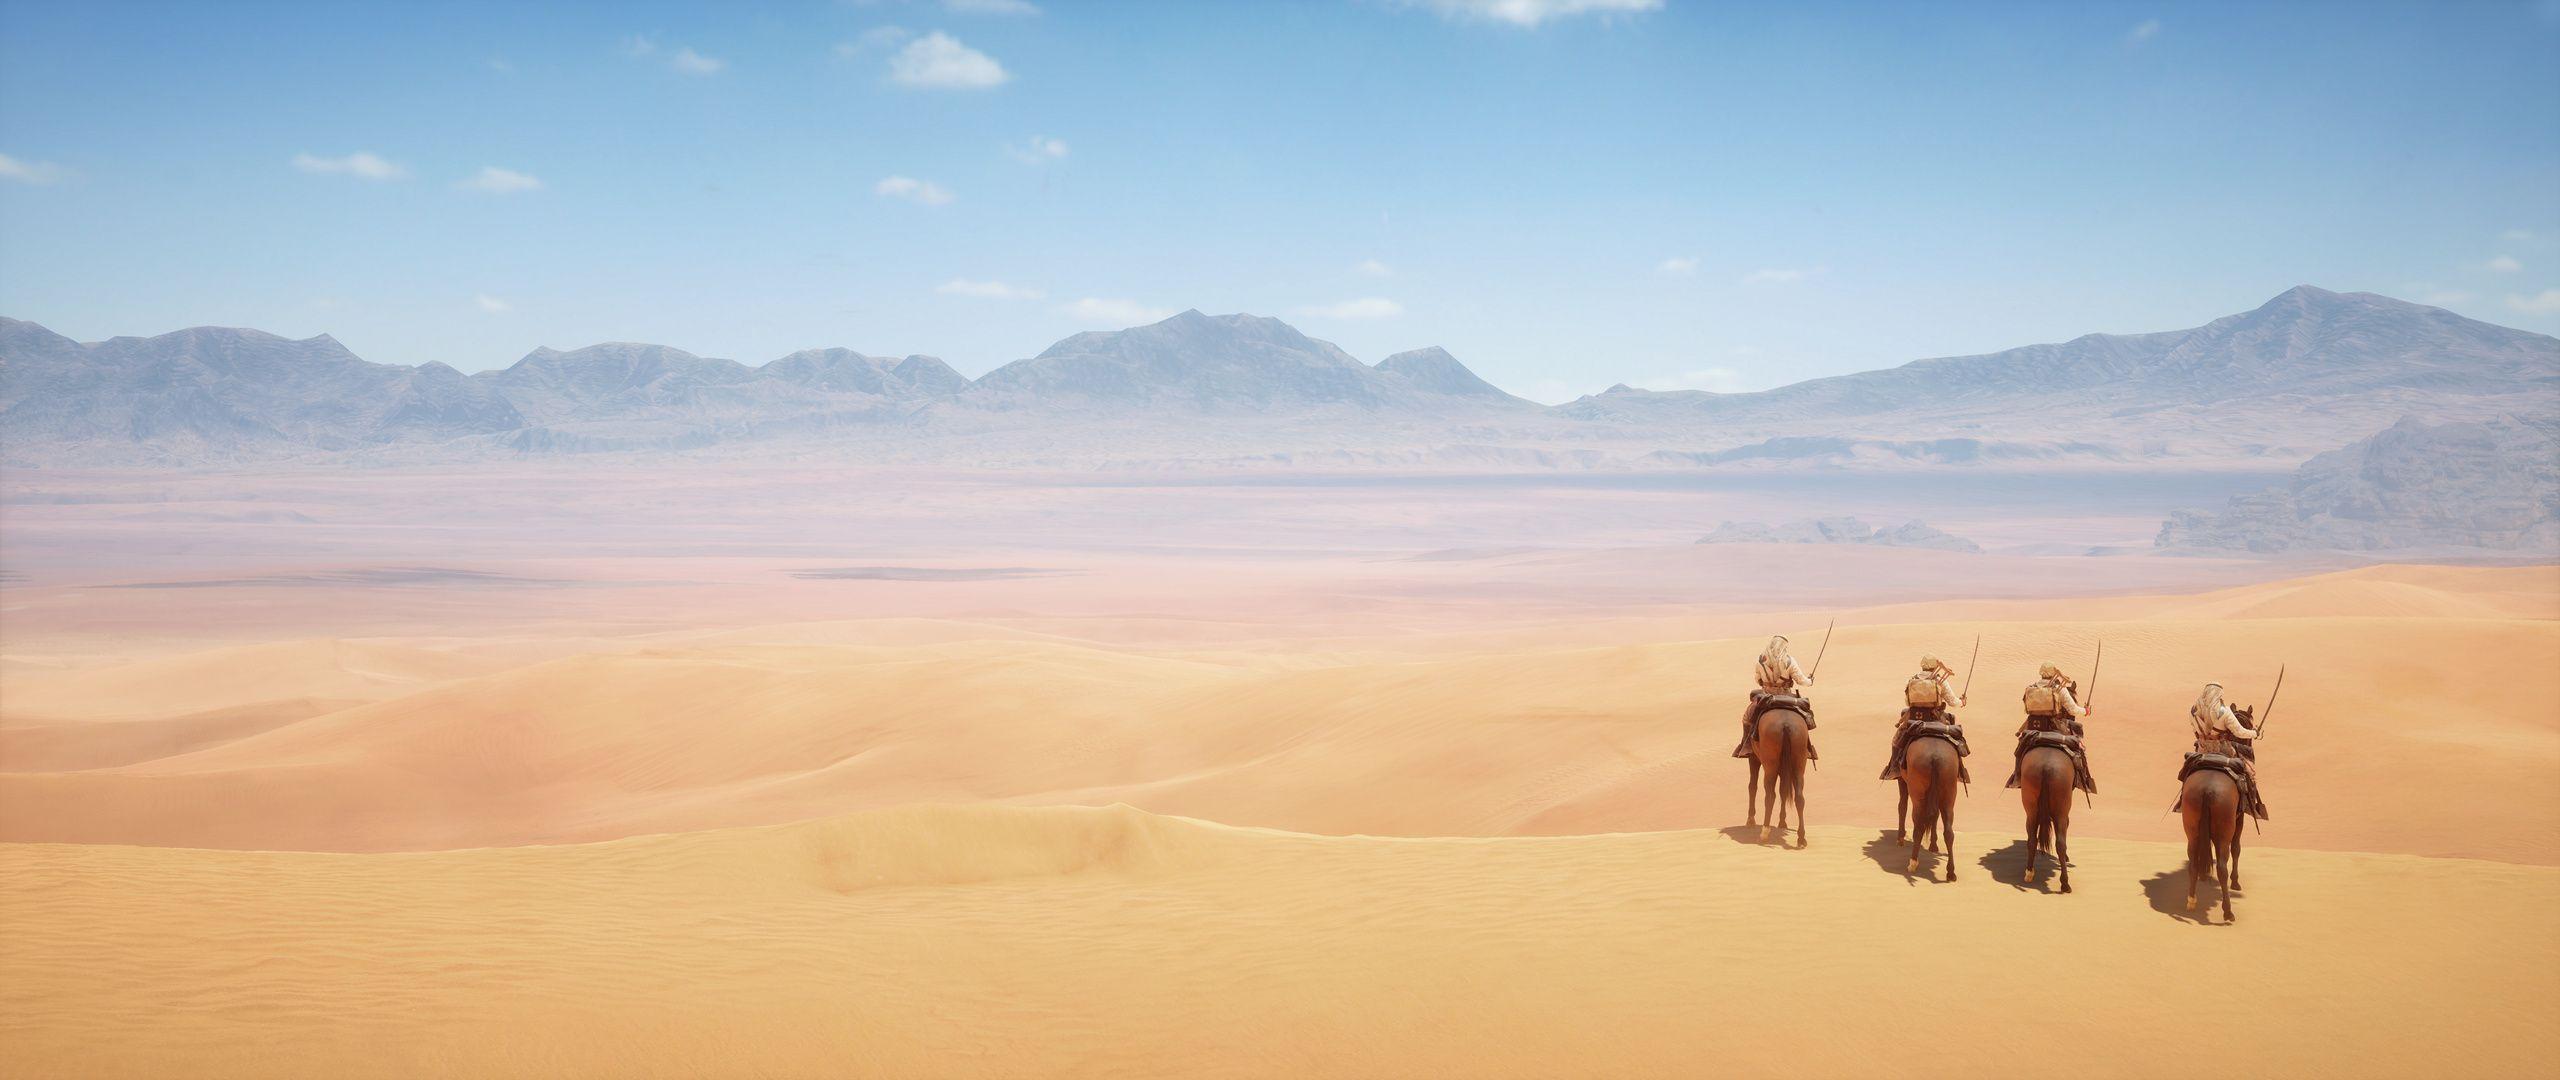 Battlefield 1 Beta // Sinai Desert. Where History Comes